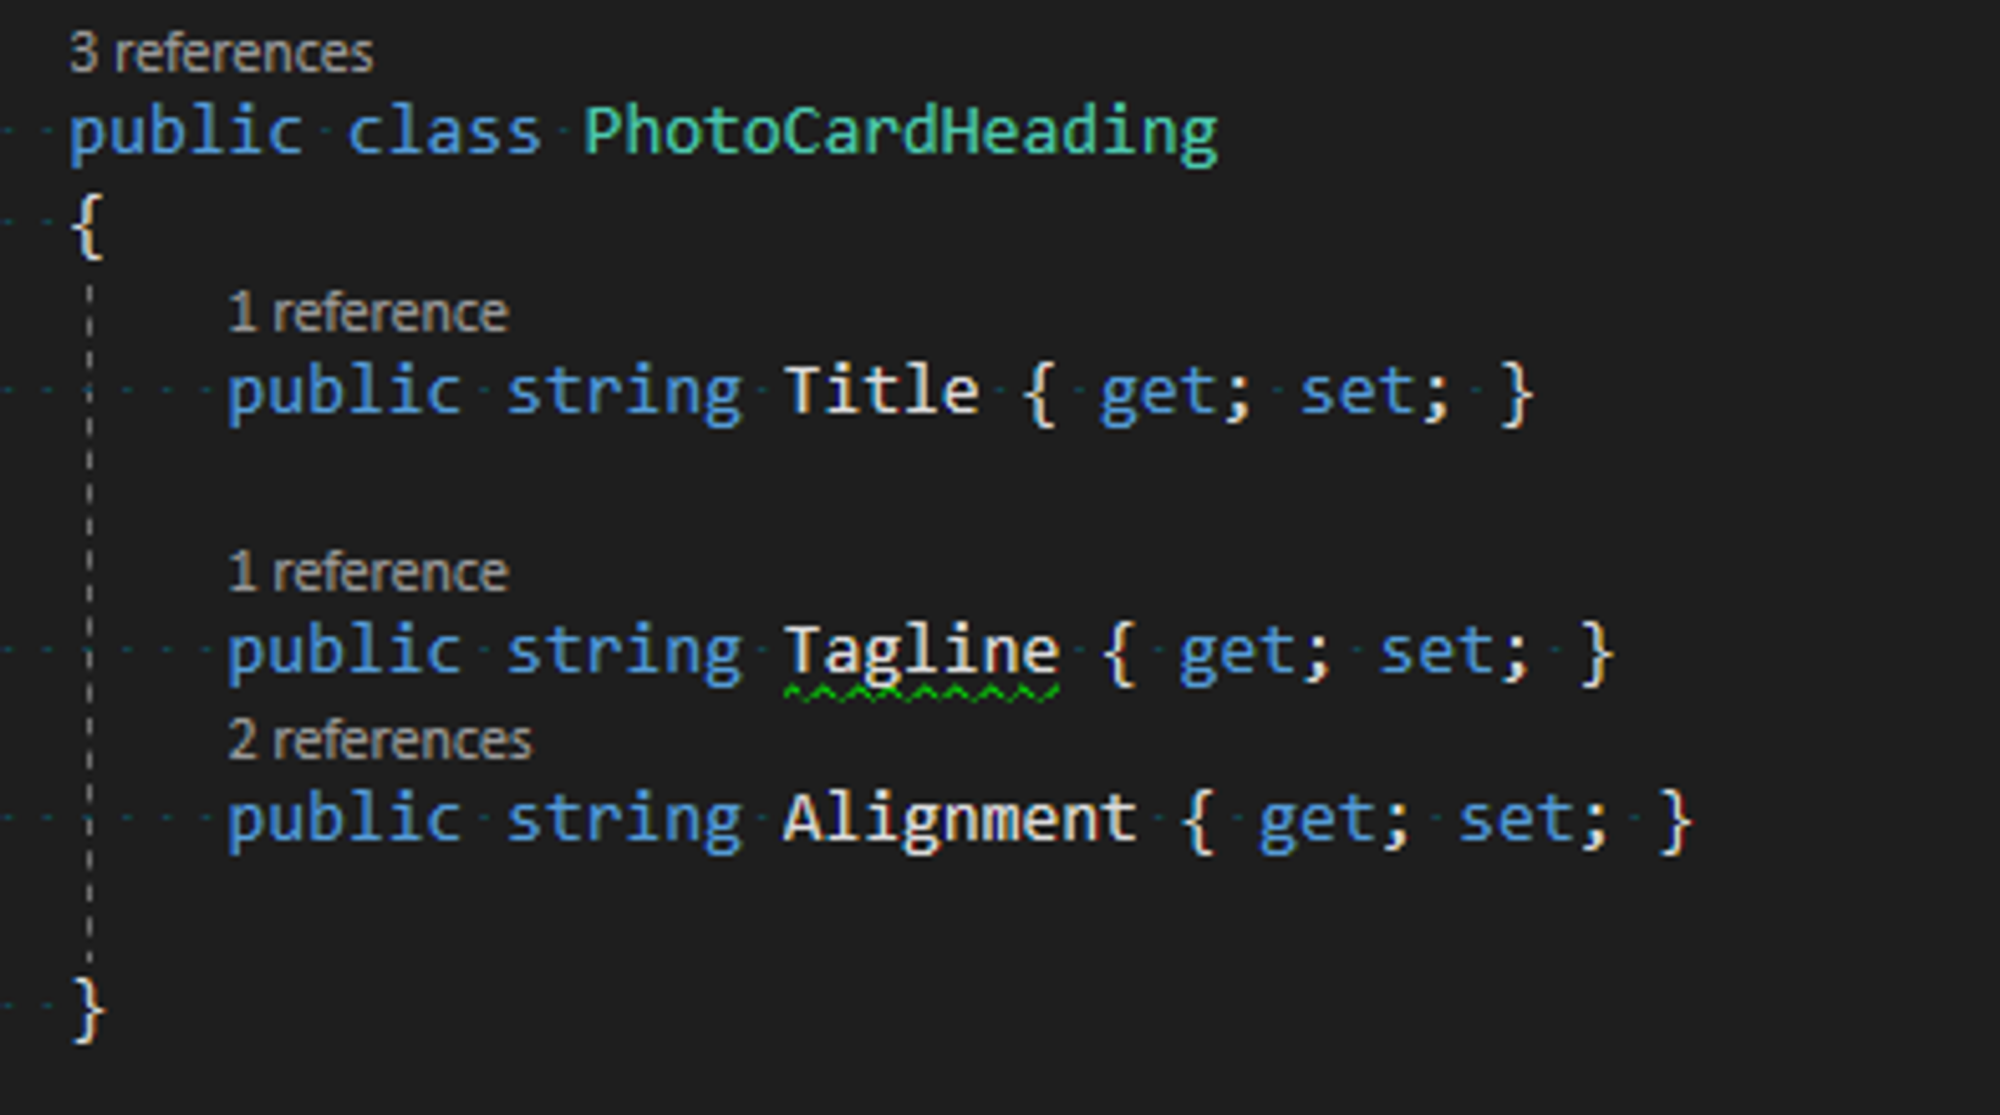 Screenshot of the Photocard Heading Model code in Visual Studio. 